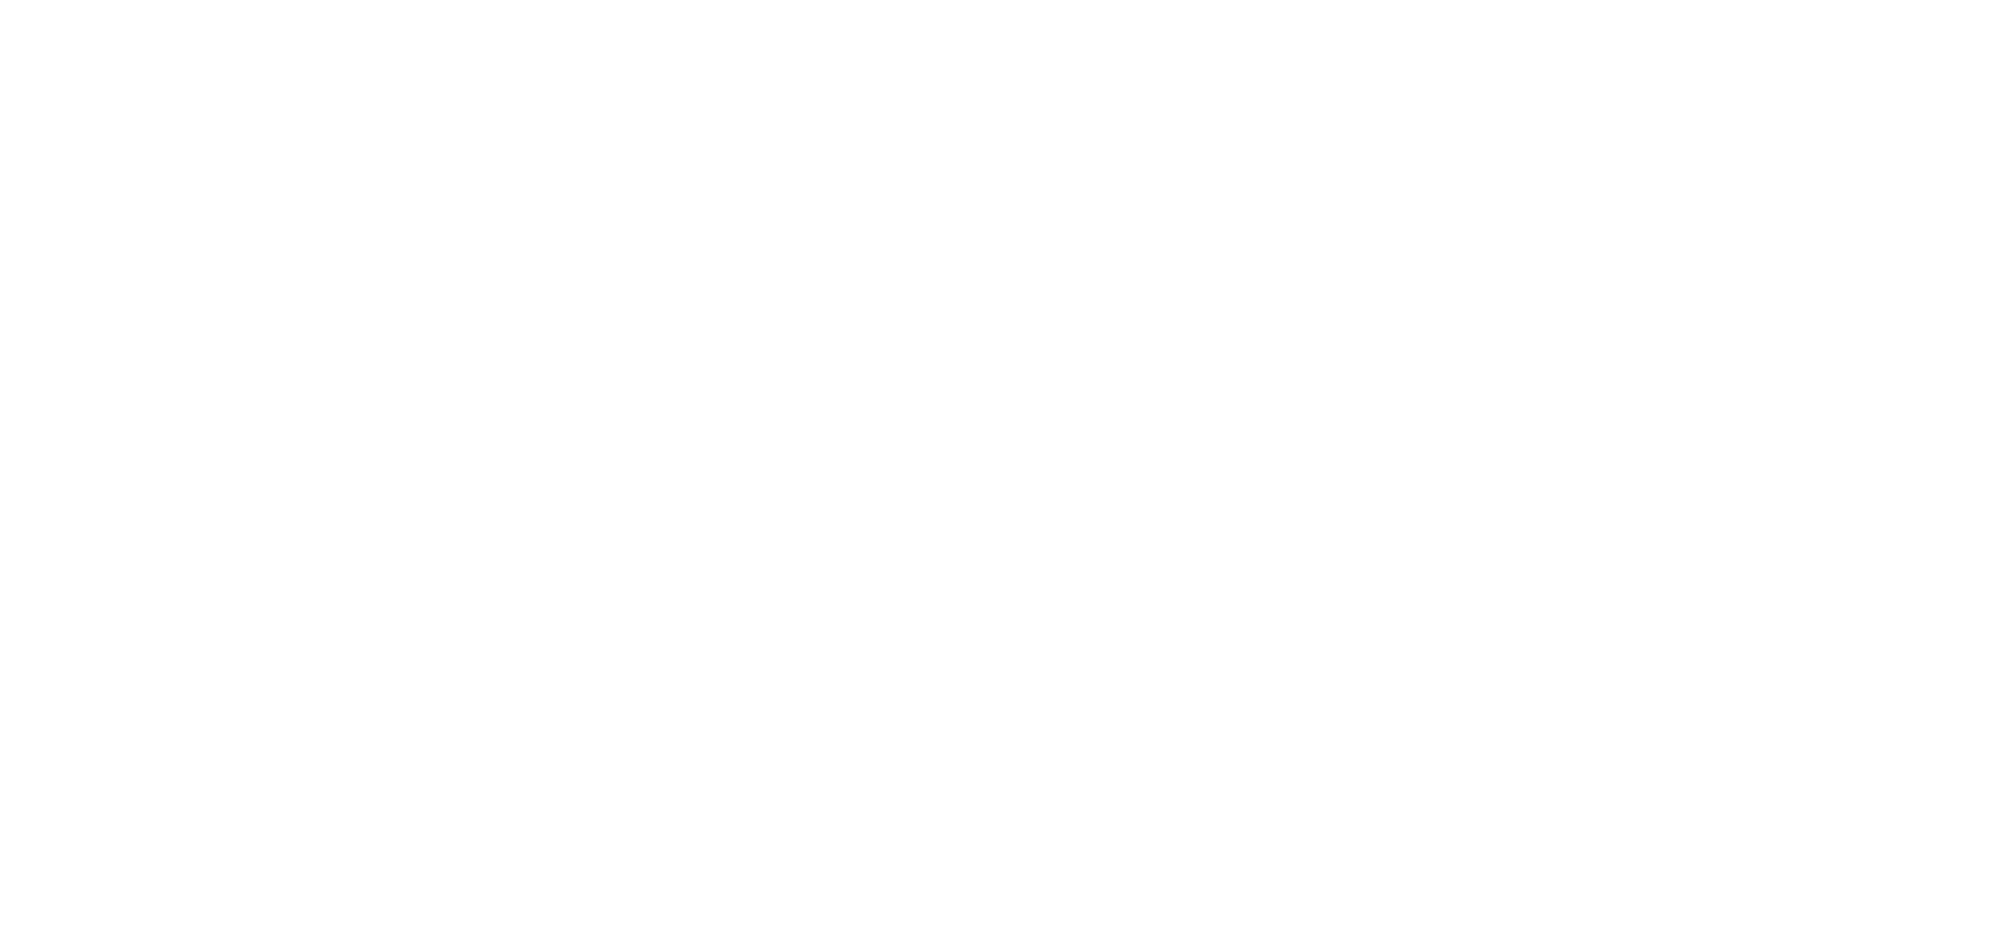 THE &quot;LOFT HOUSE&quot; BARN LODGE